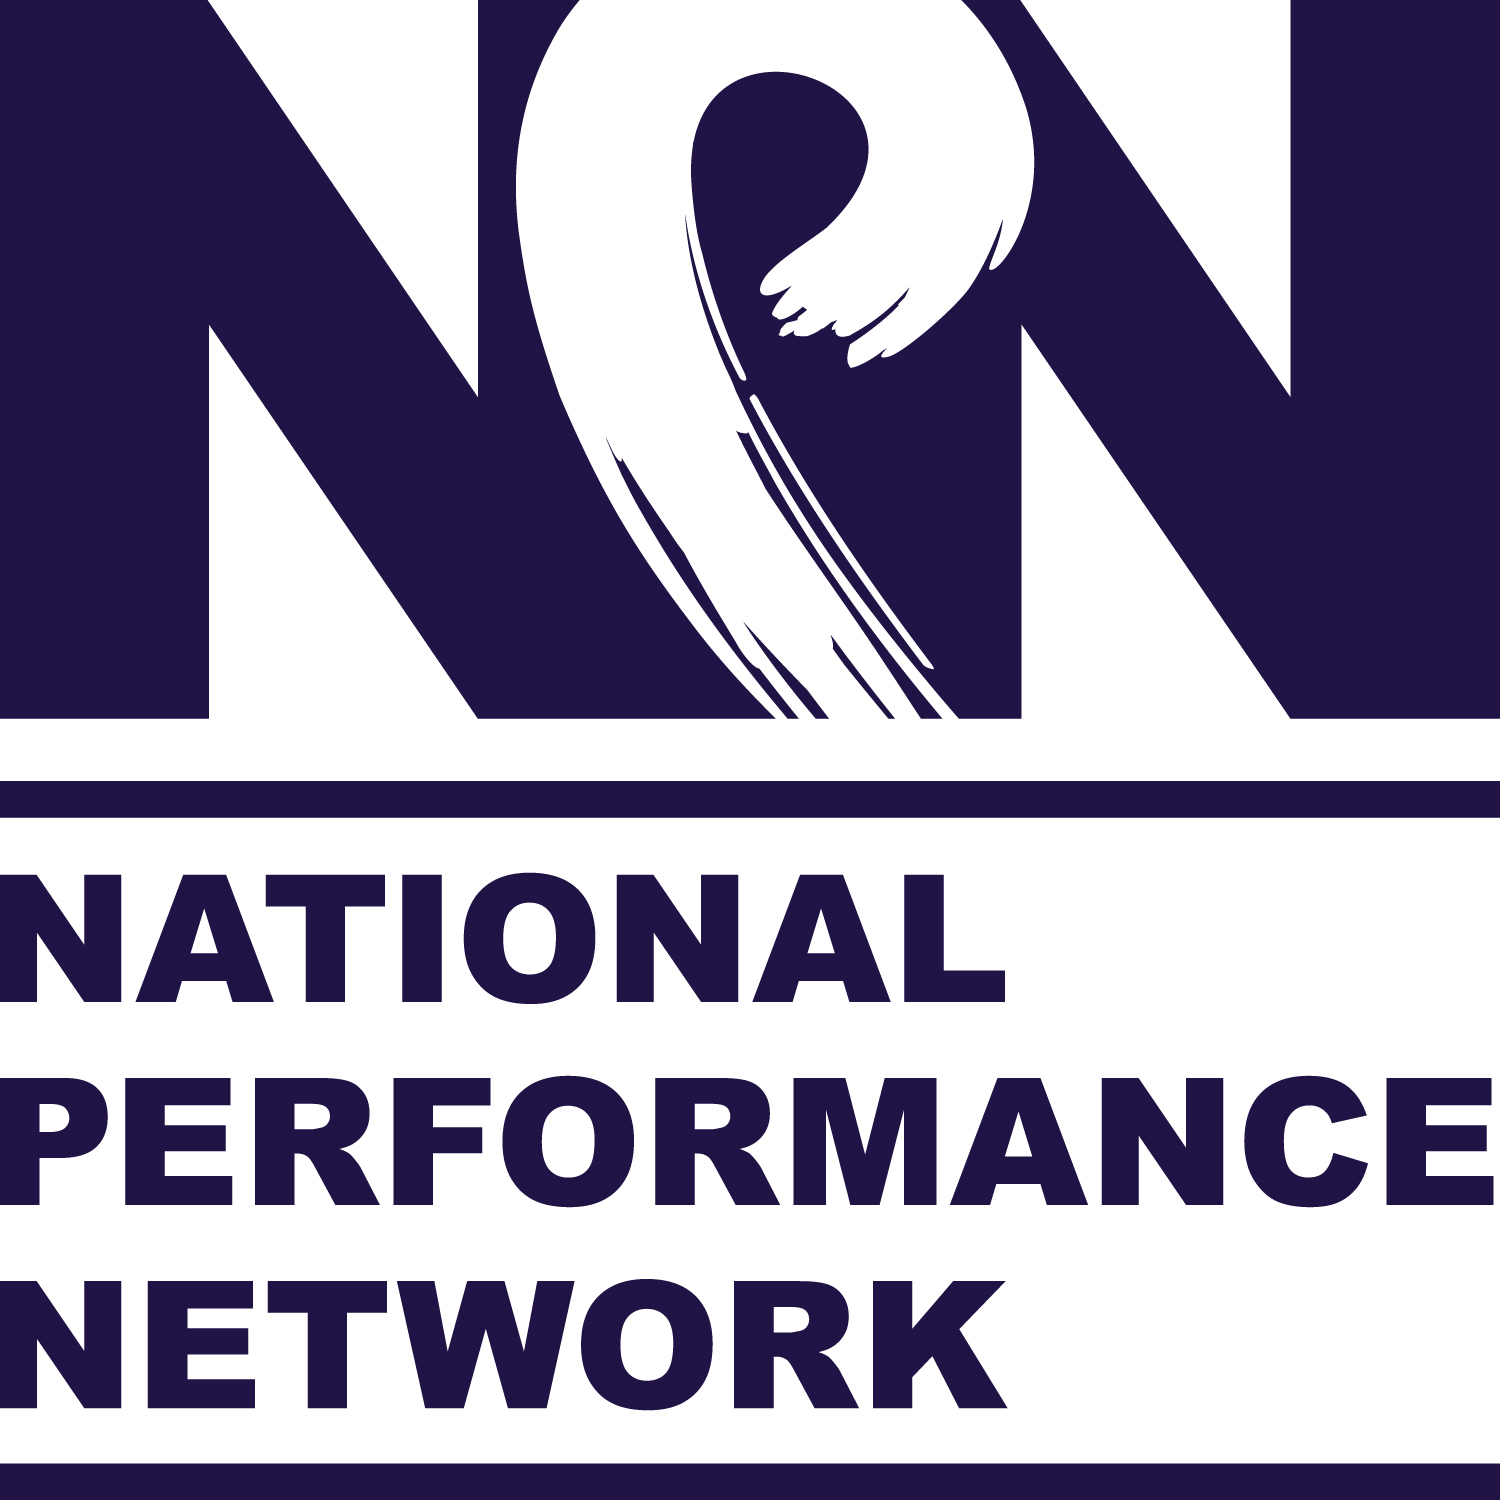 National Performance Network logo - Links to website